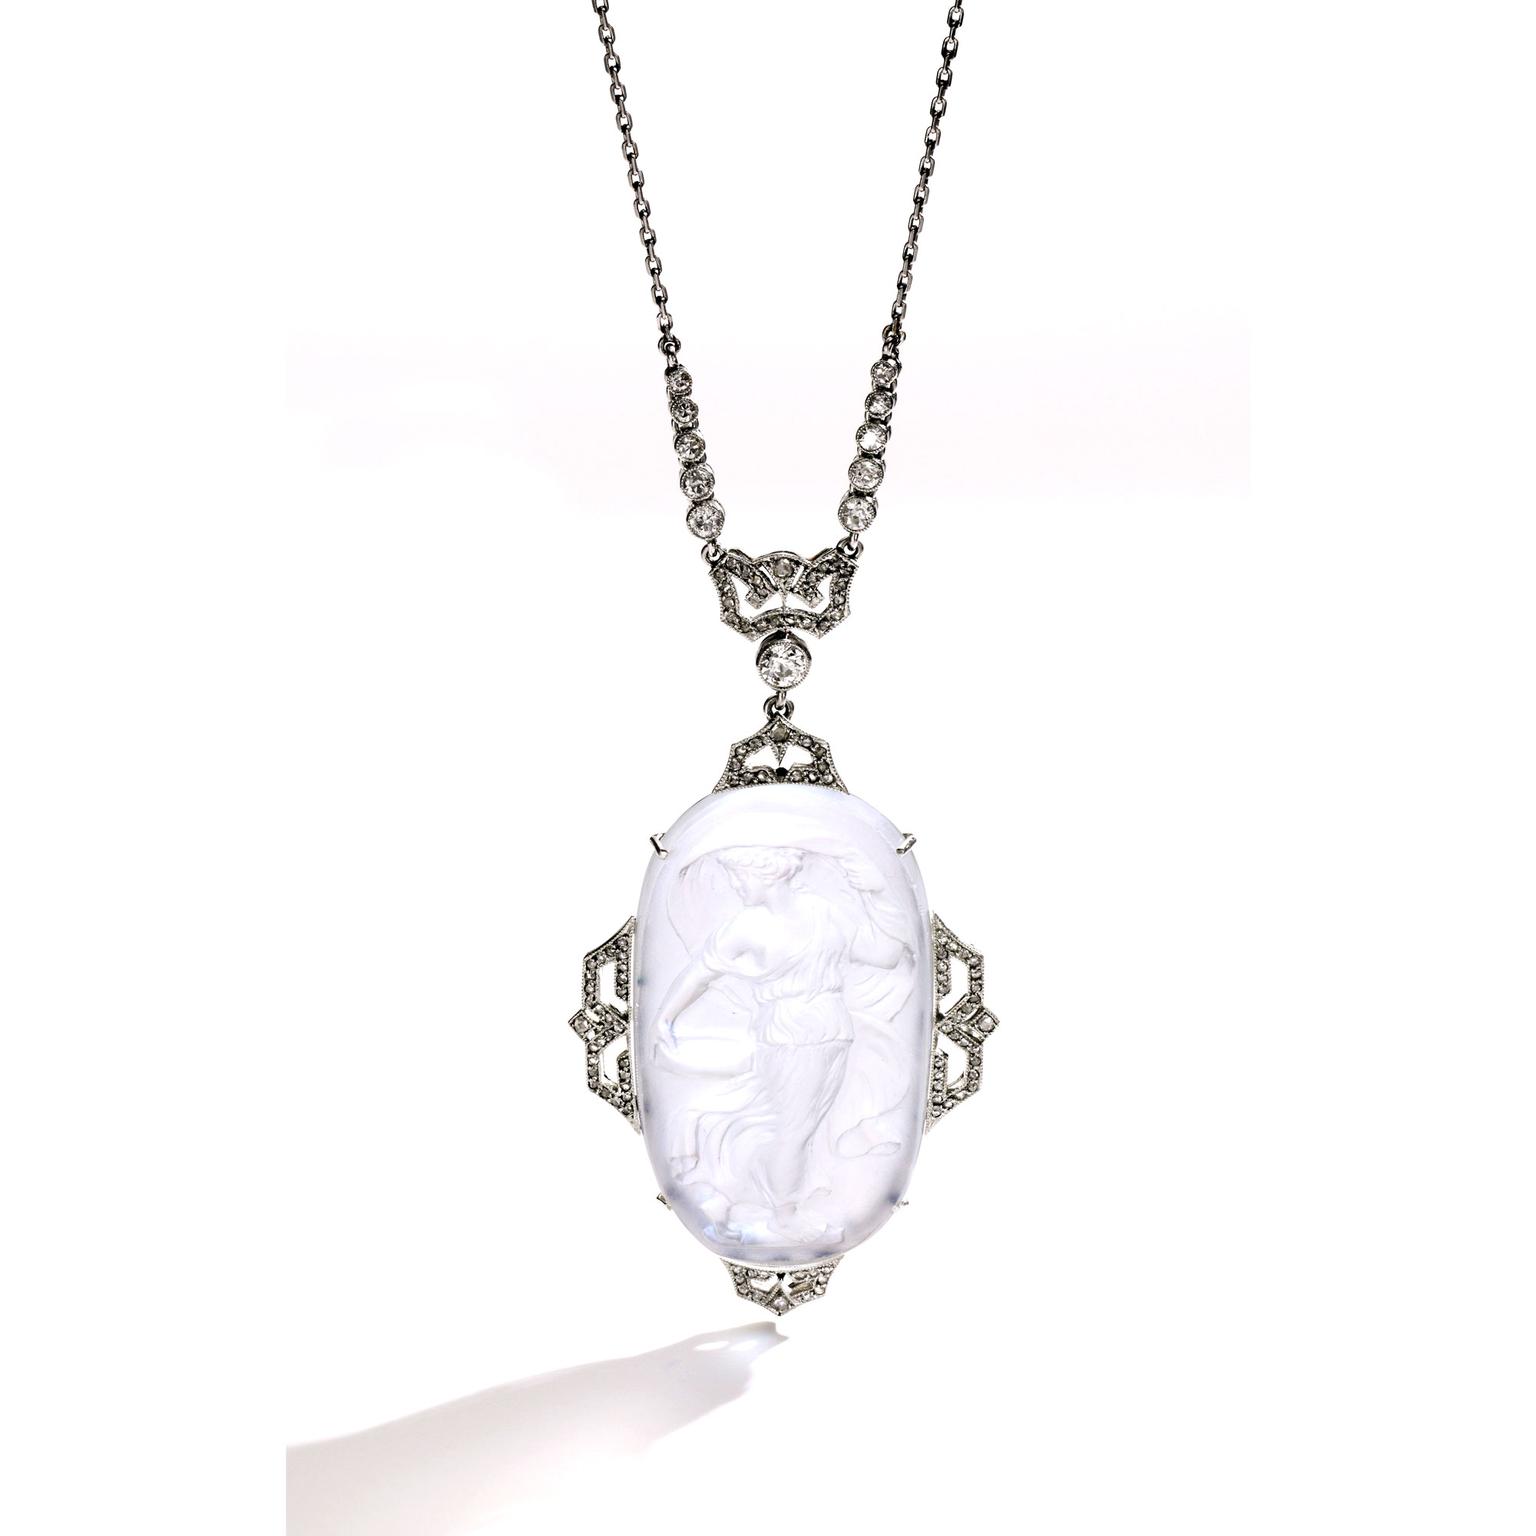 Lot 371 Janesich diamond necklace